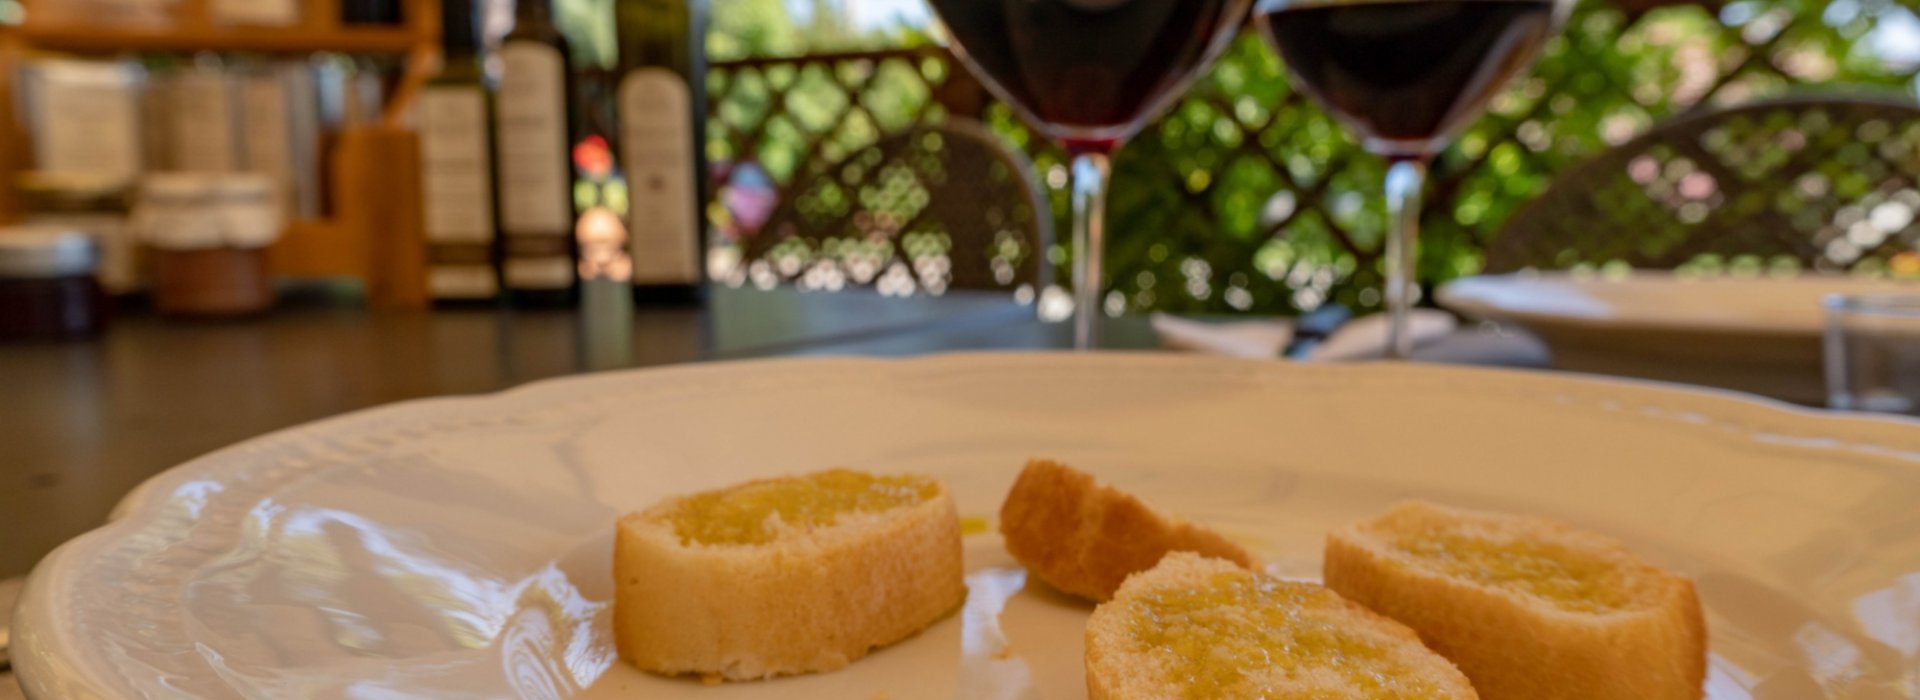 Photos of bruschetta and wine tasting